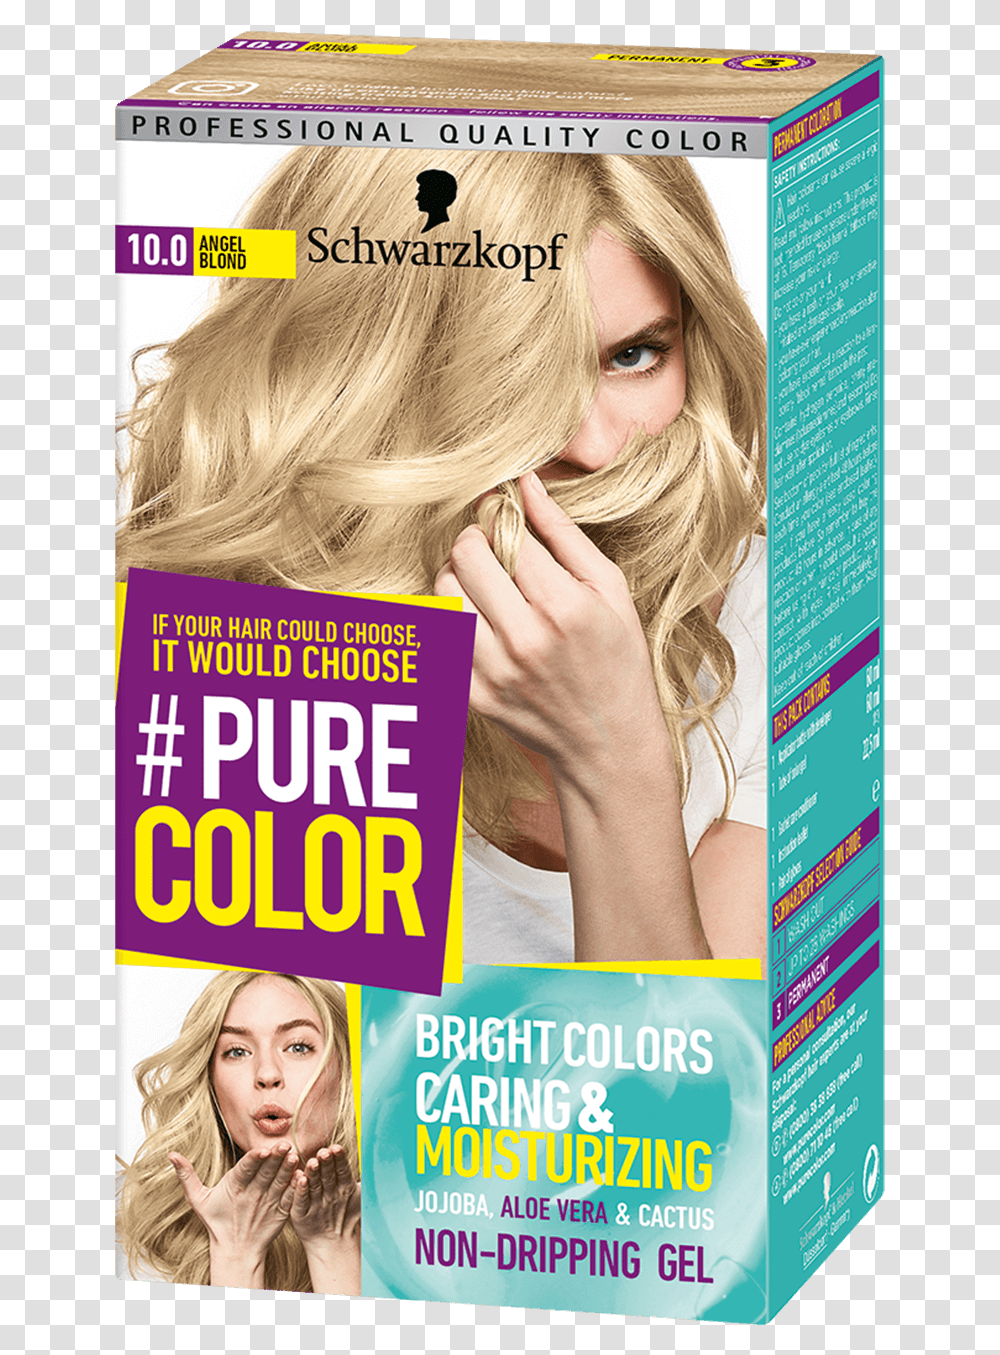 Pure Color Com Baseline 10 0 Angel Blond Schwarzkopf Pure Color Blond, Person, Human, Advertisement, Poster Transparent Png